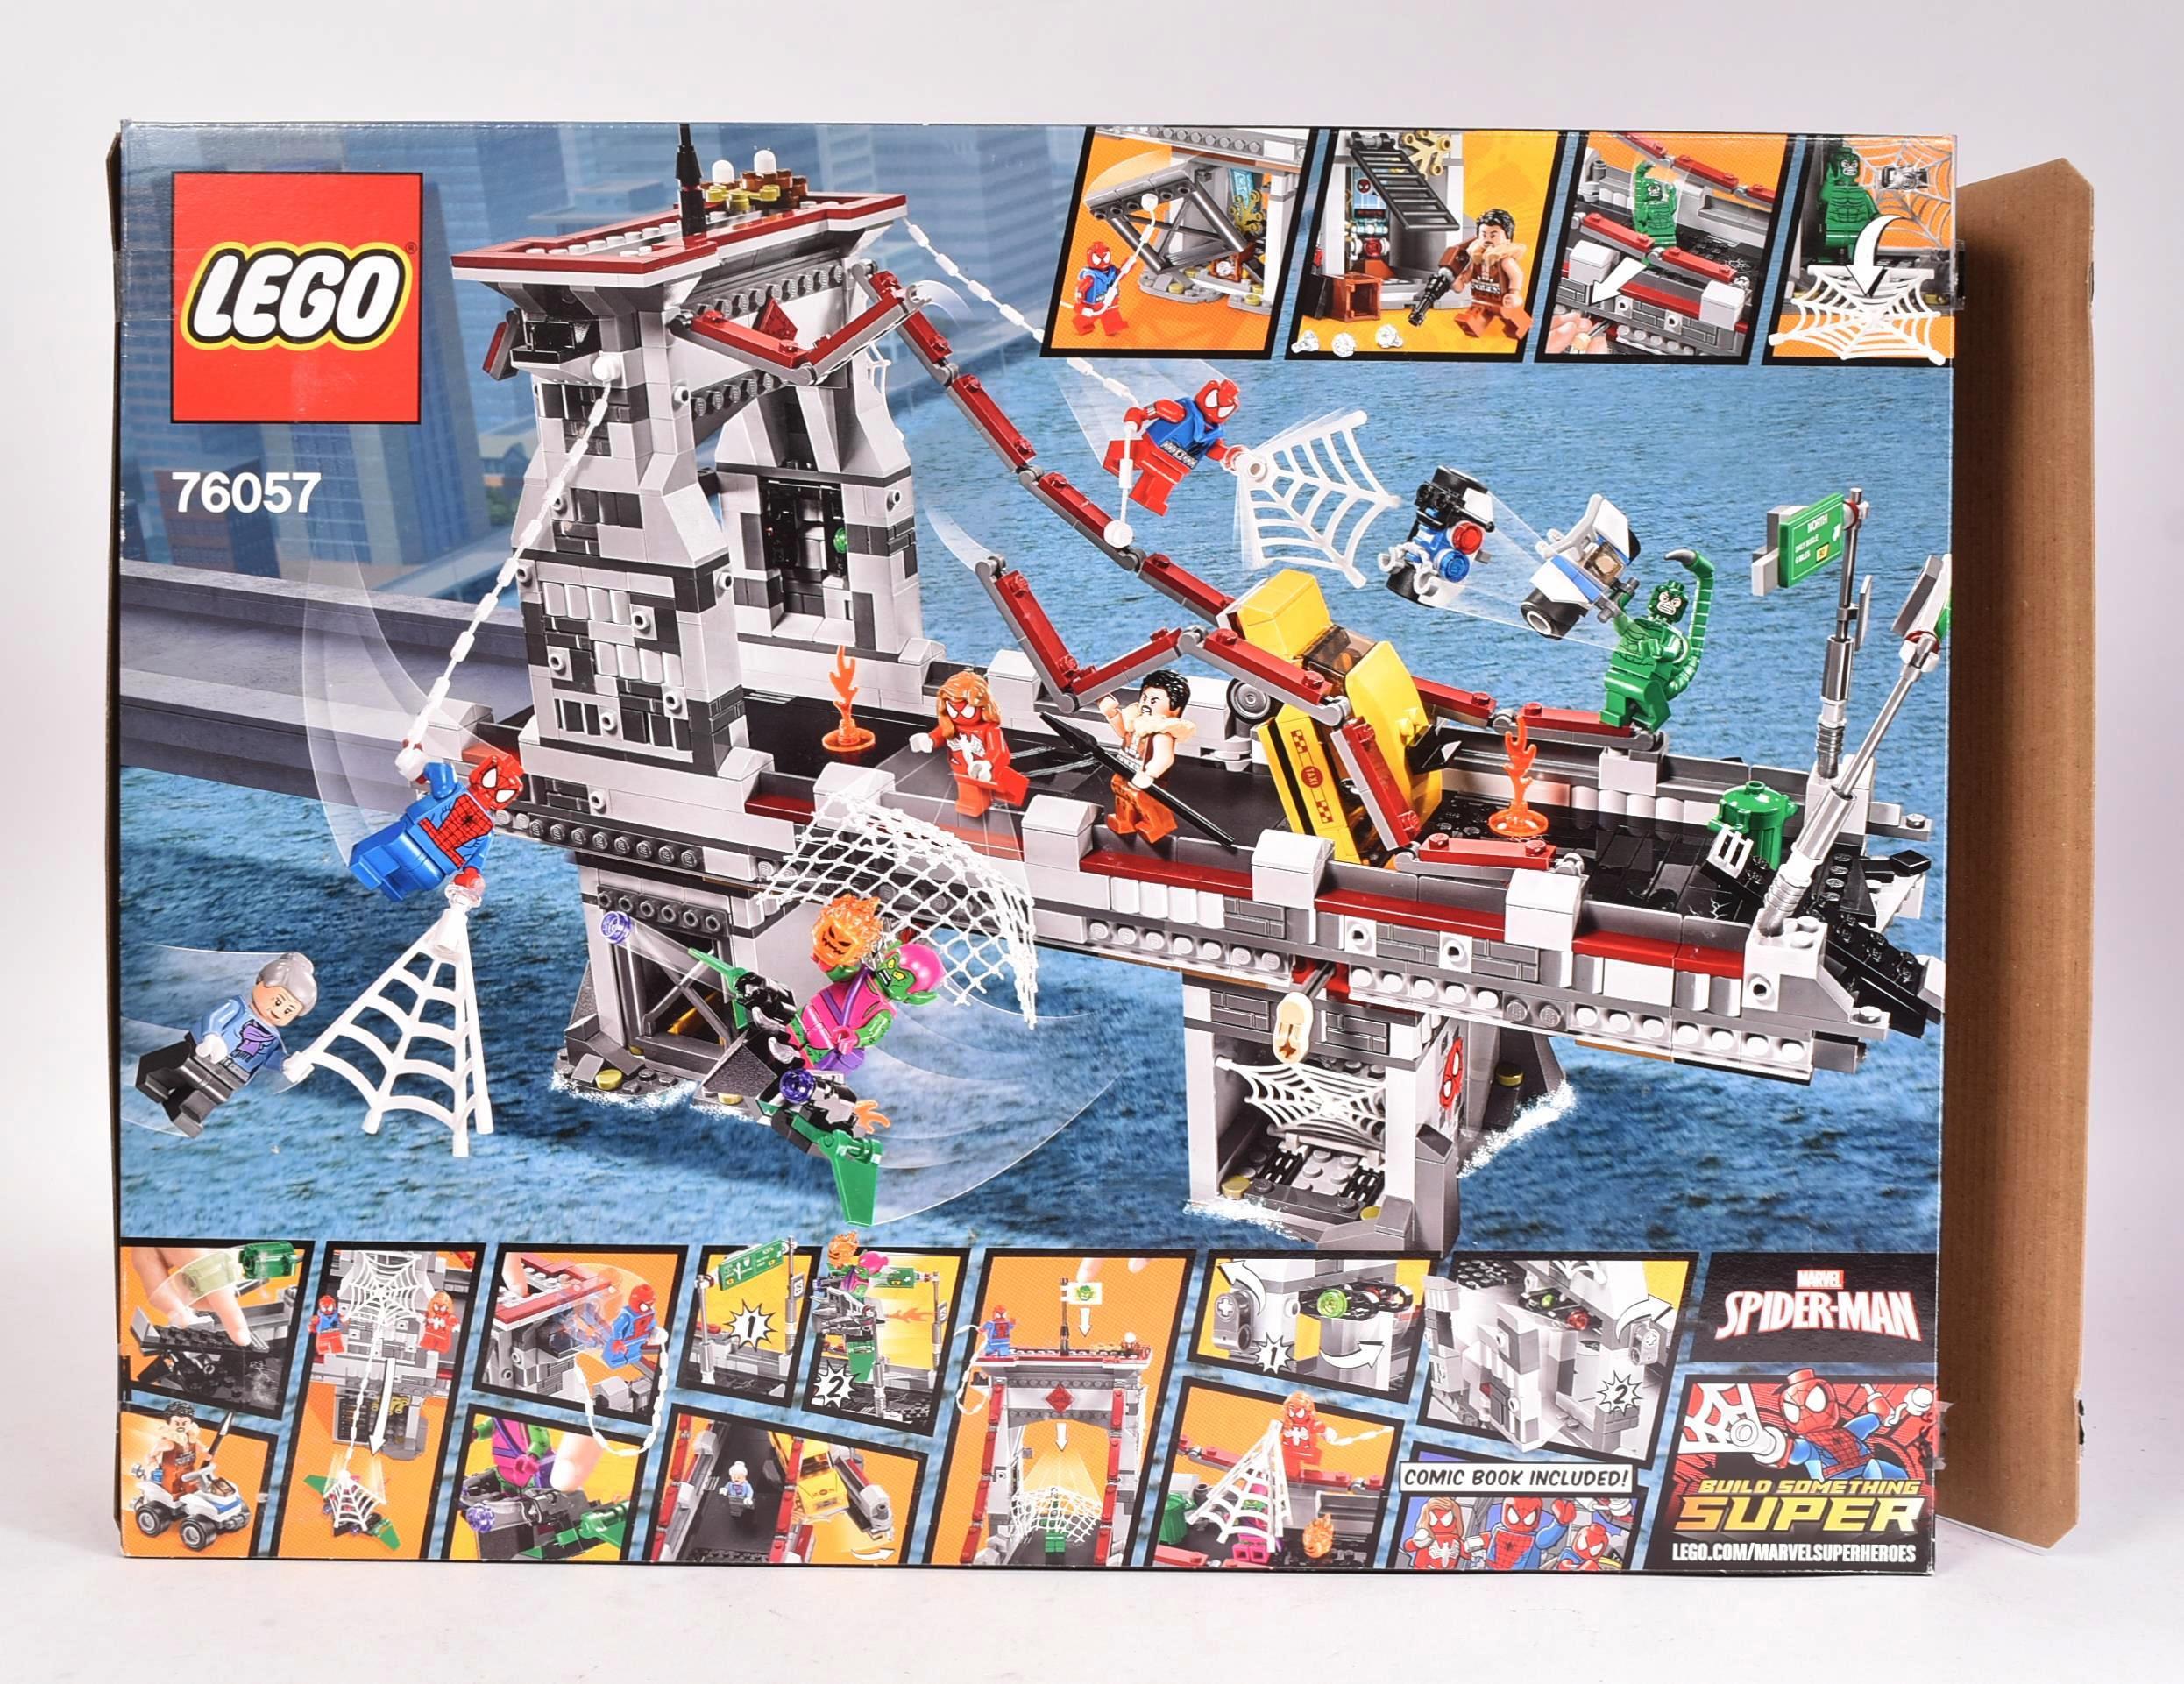 LEGO - MARVEL - 76057 - SPIDERMAN WEB WARRIORS ULTIMATE BATTLE BRIDGE - Image 2 of 5